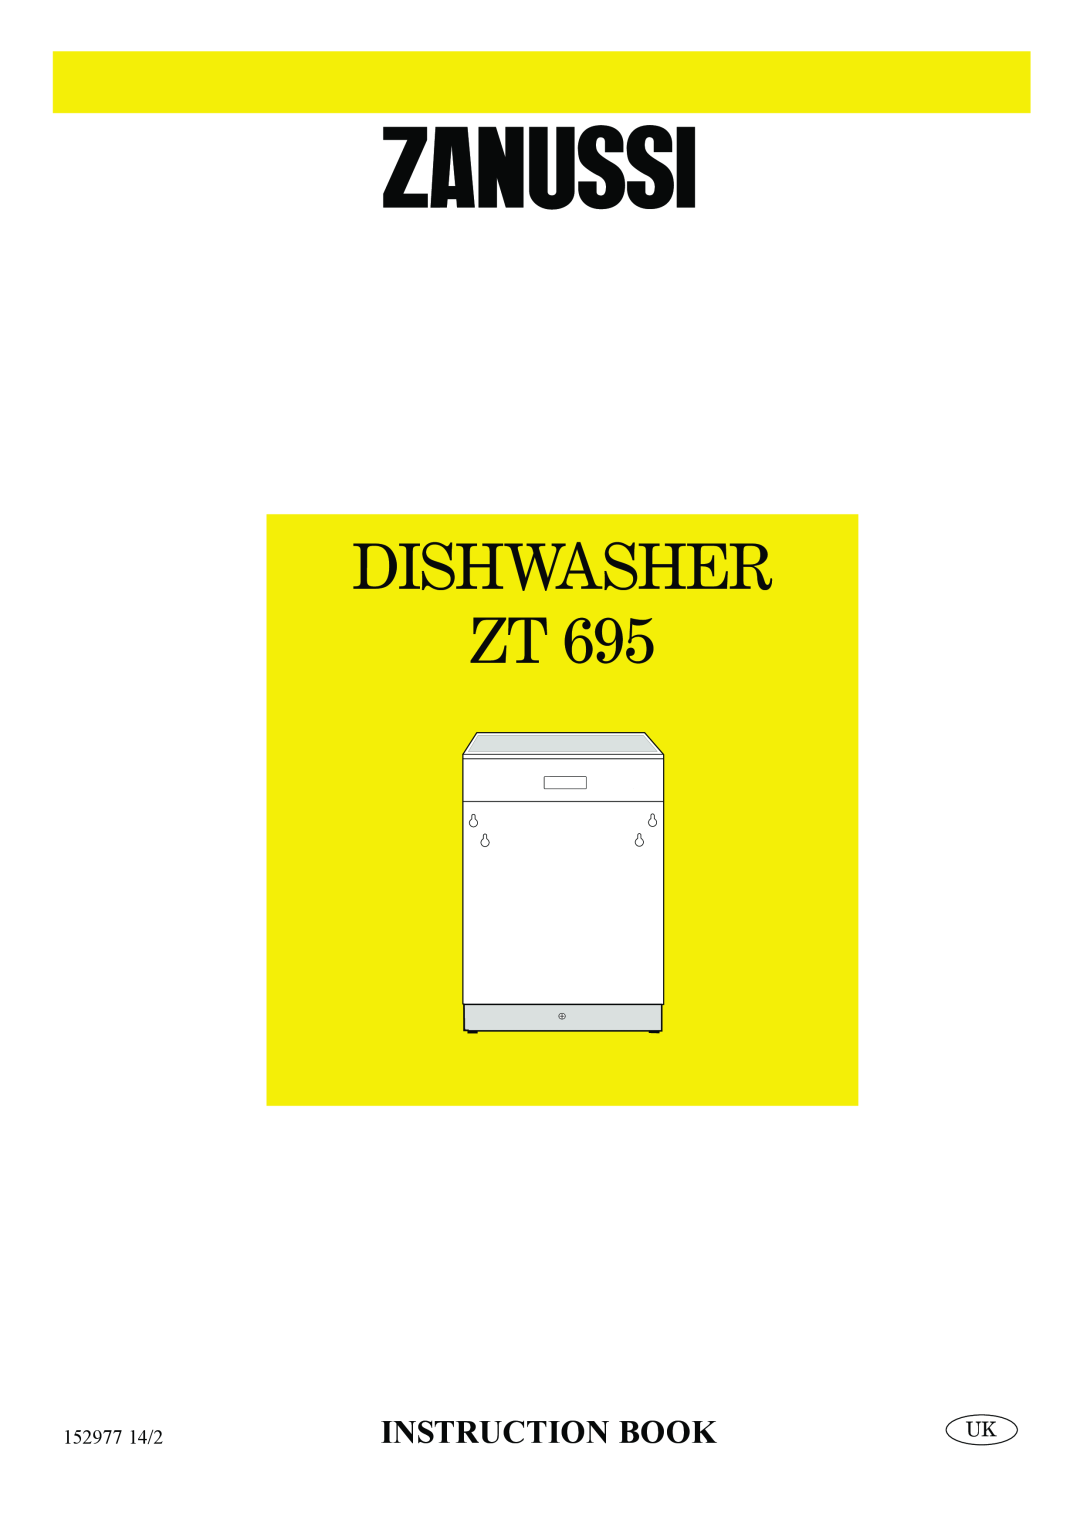 Zanussi ZT 695 manual Dishwasher Zt, Instruction Book, 152977 14/2 